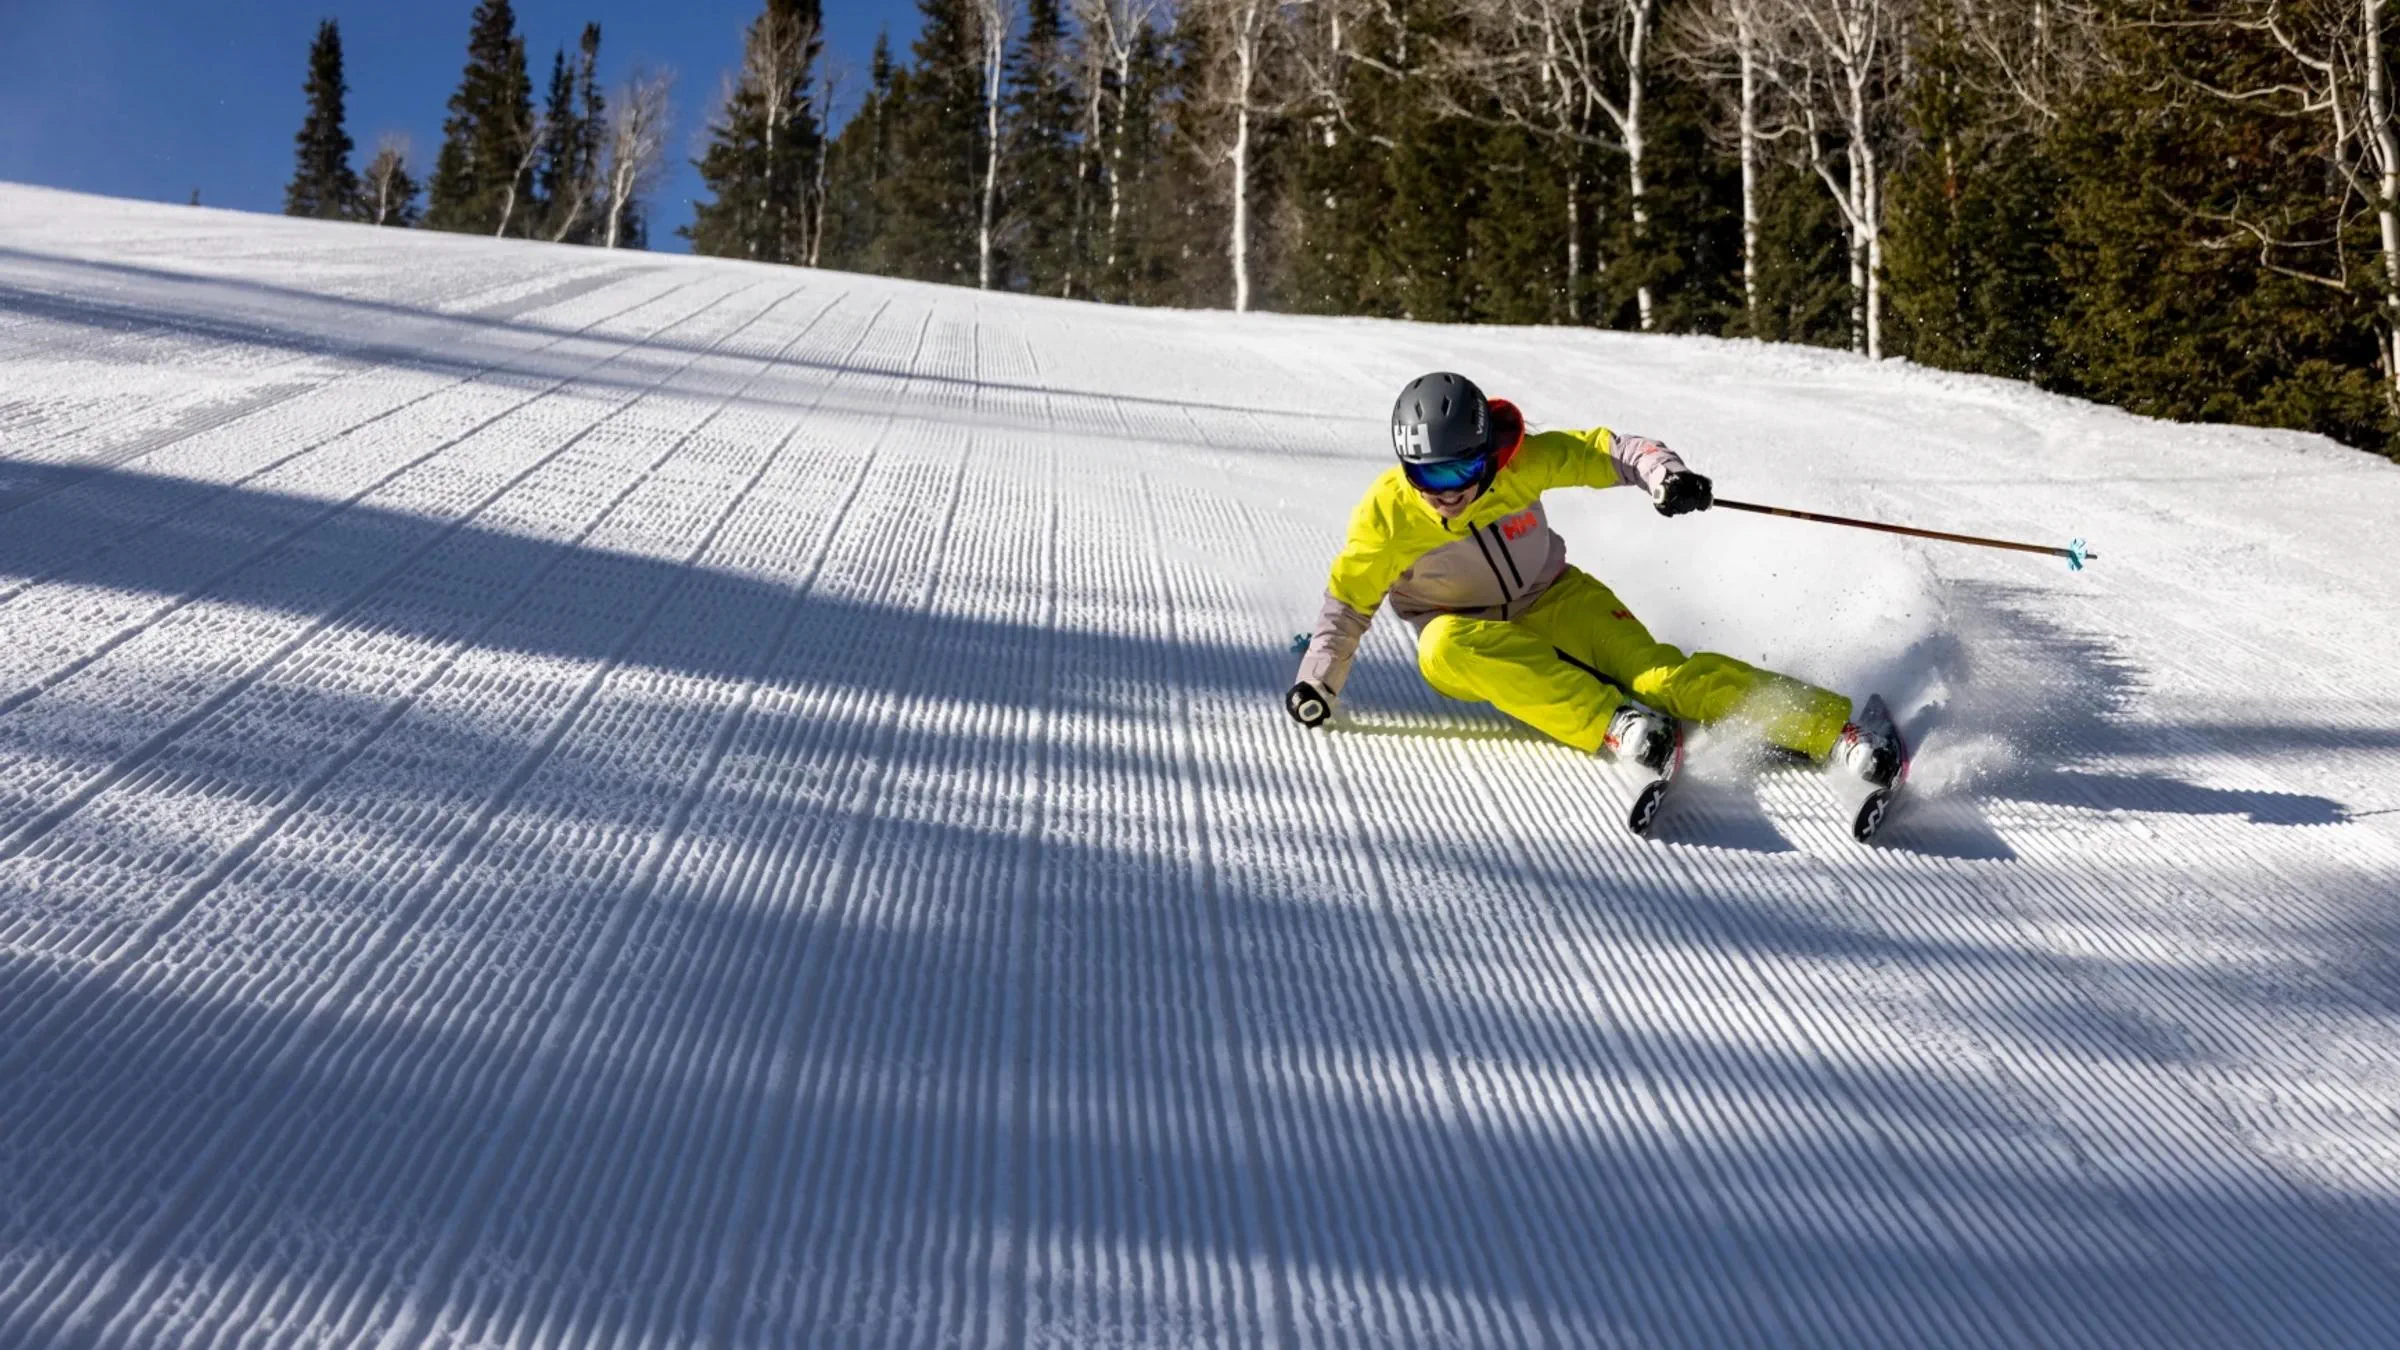 A guest skiing powder at Deer Valley Resort